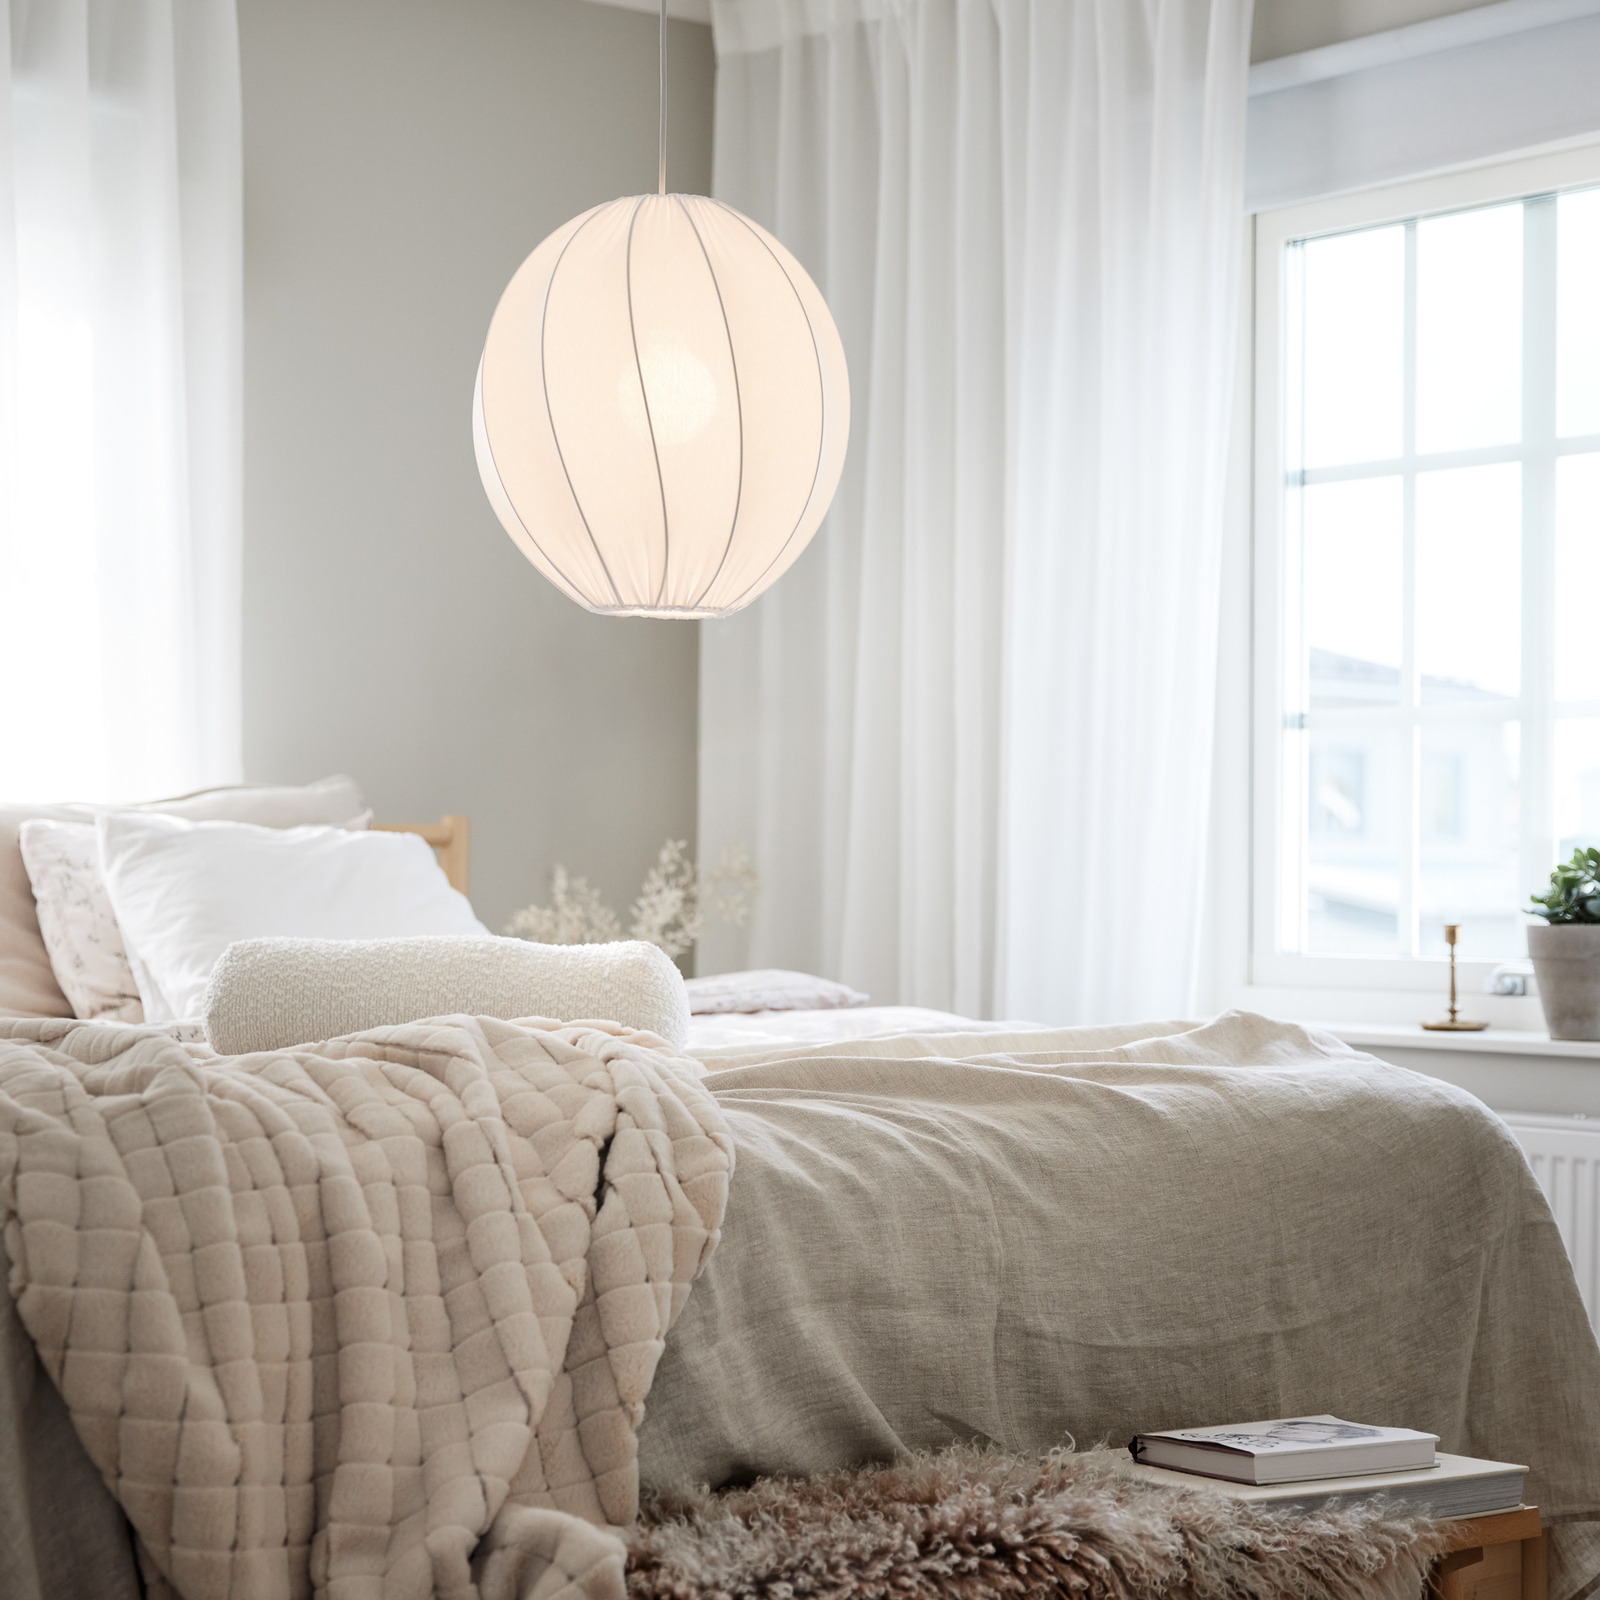 PR Home Висяща лампа Olivia, текстилен абажур, бяла, Ø 35 cm